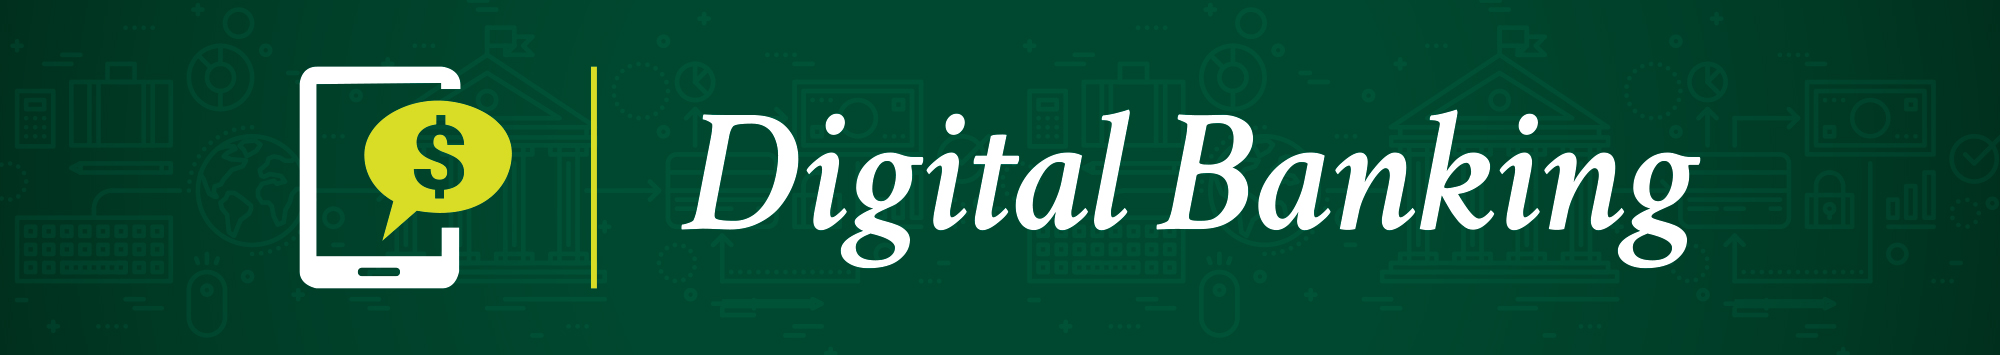 Digital Banking Banner